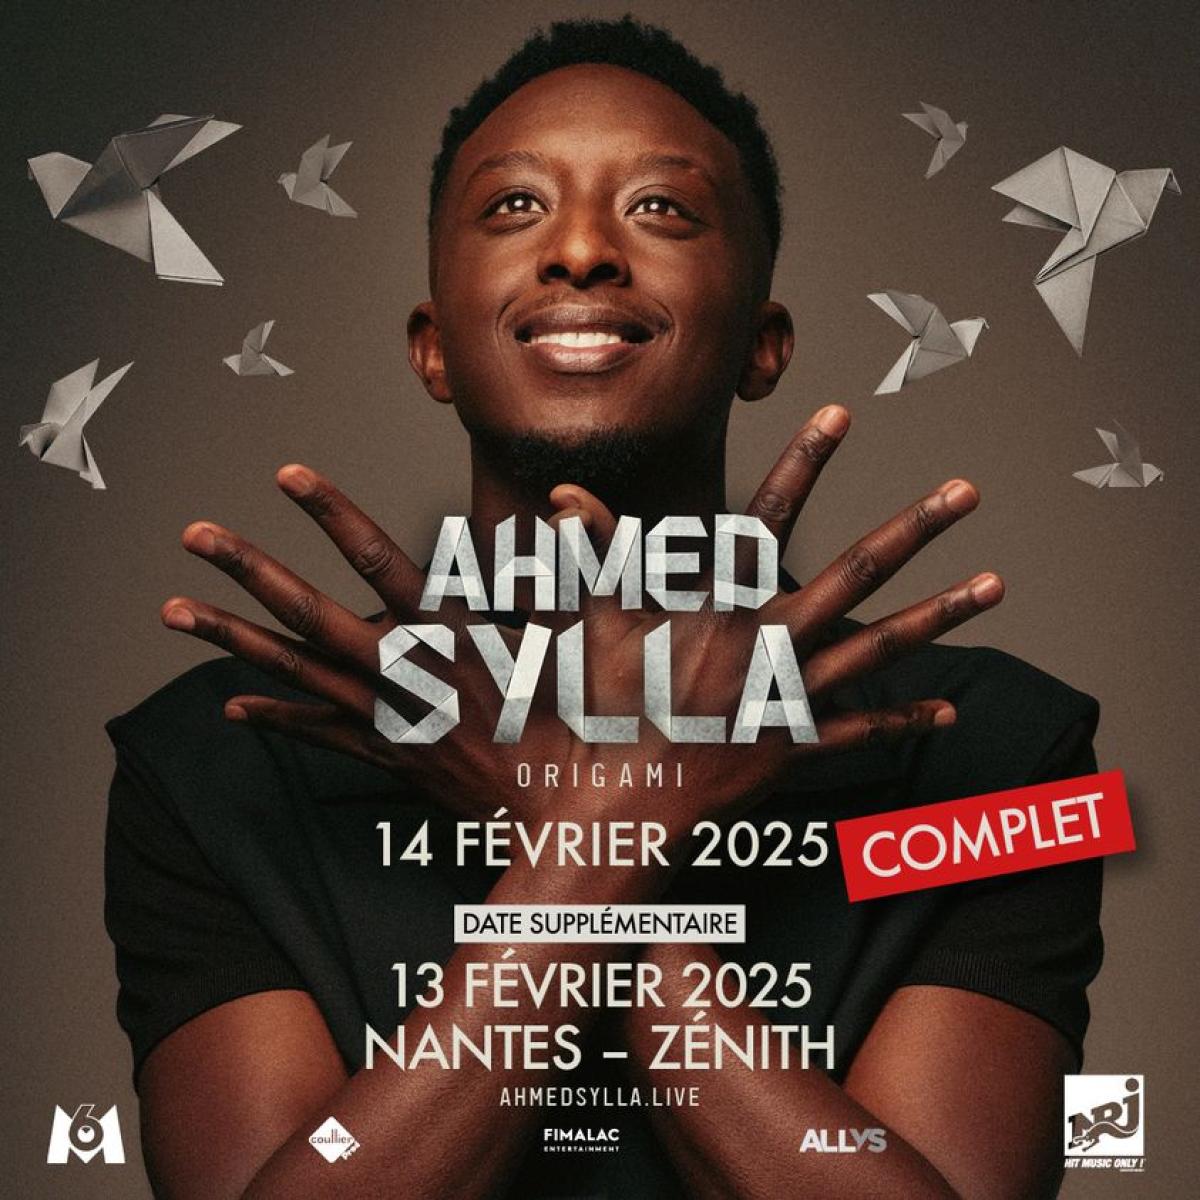 Ahmed Sylla in der Zenith Nantes Tickets